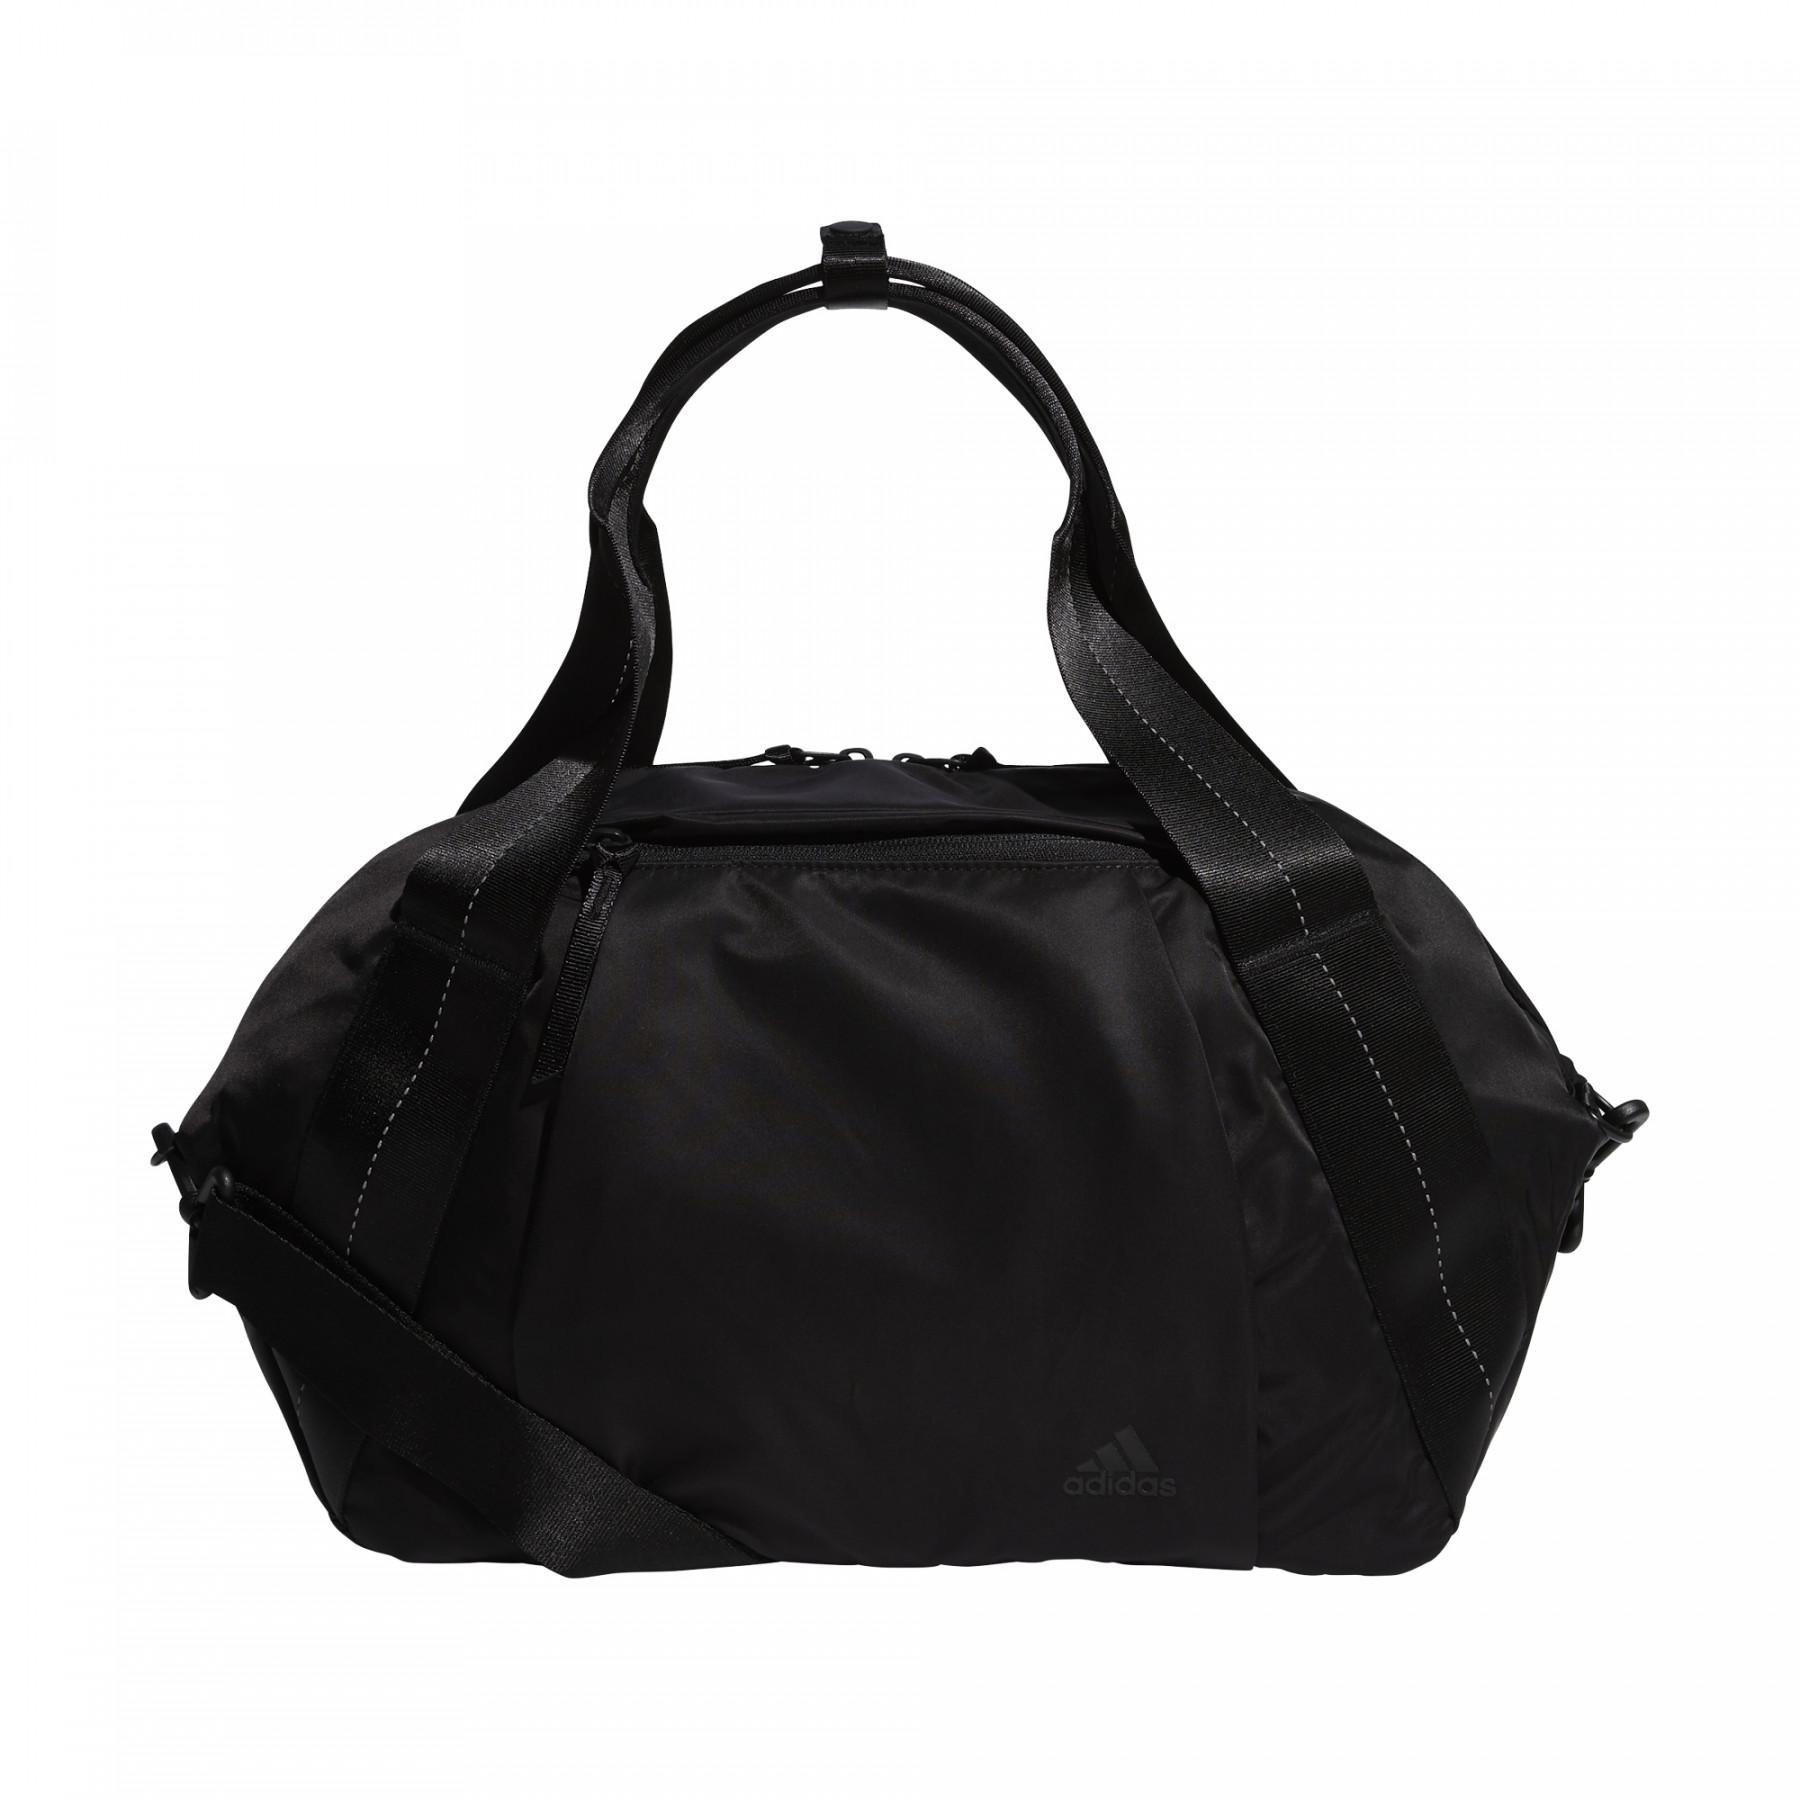 Women's sports bag adidas Favorite S - Sport bags - Bags - Equipment